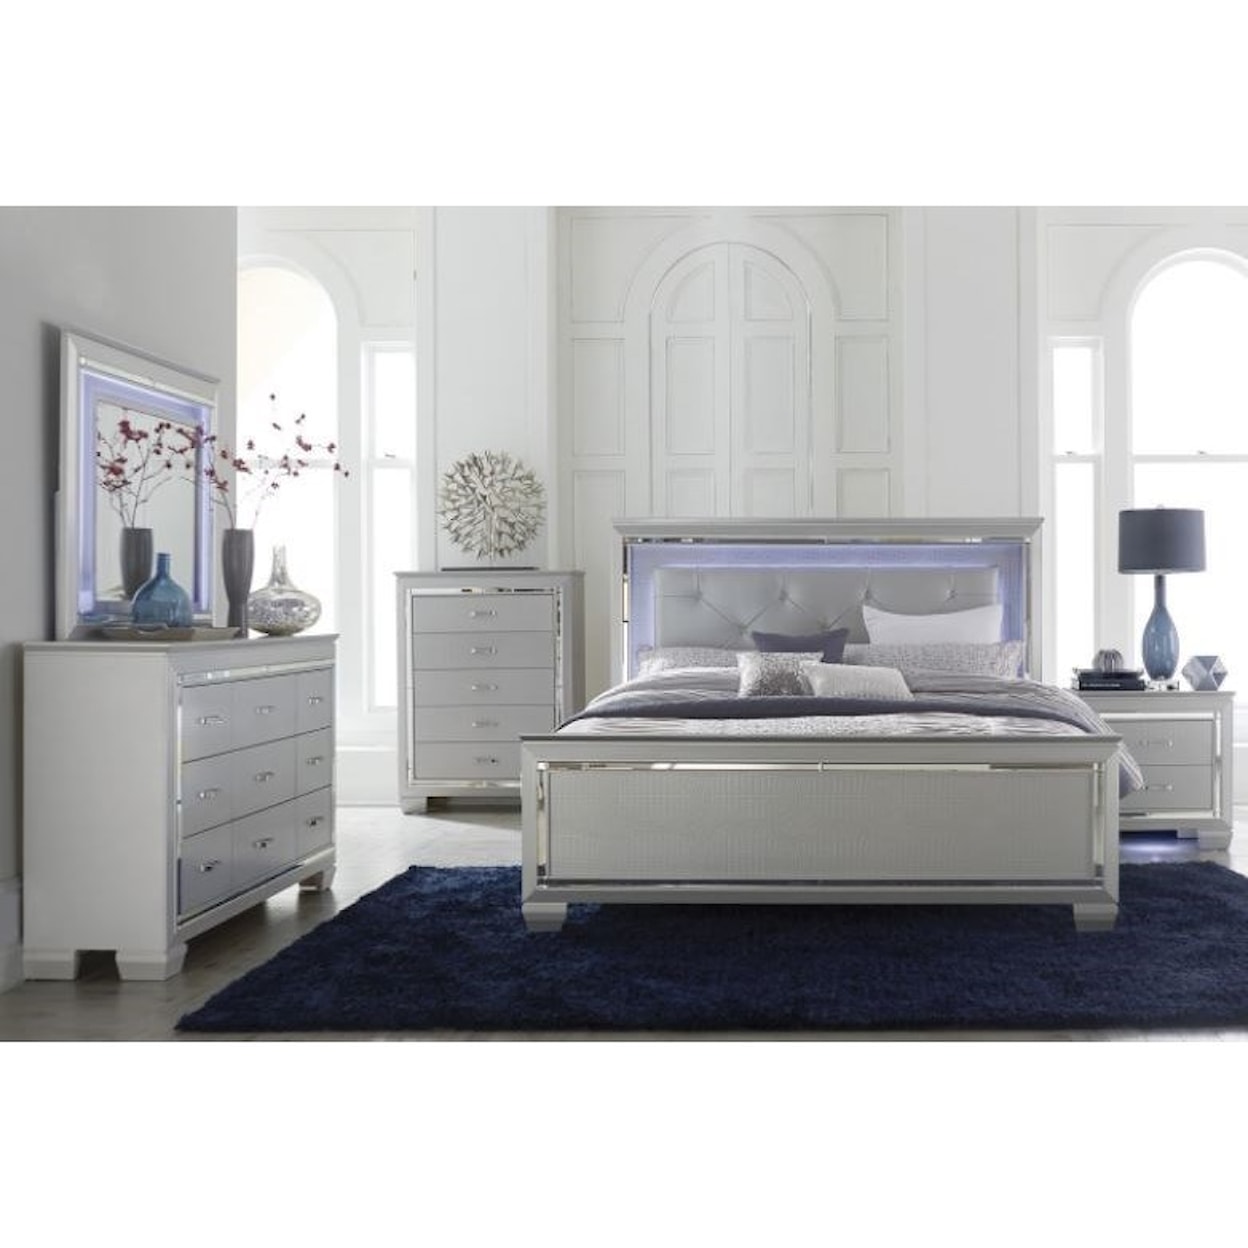 Homelegance Furniture Allura 5-Piece King Bedroom Group